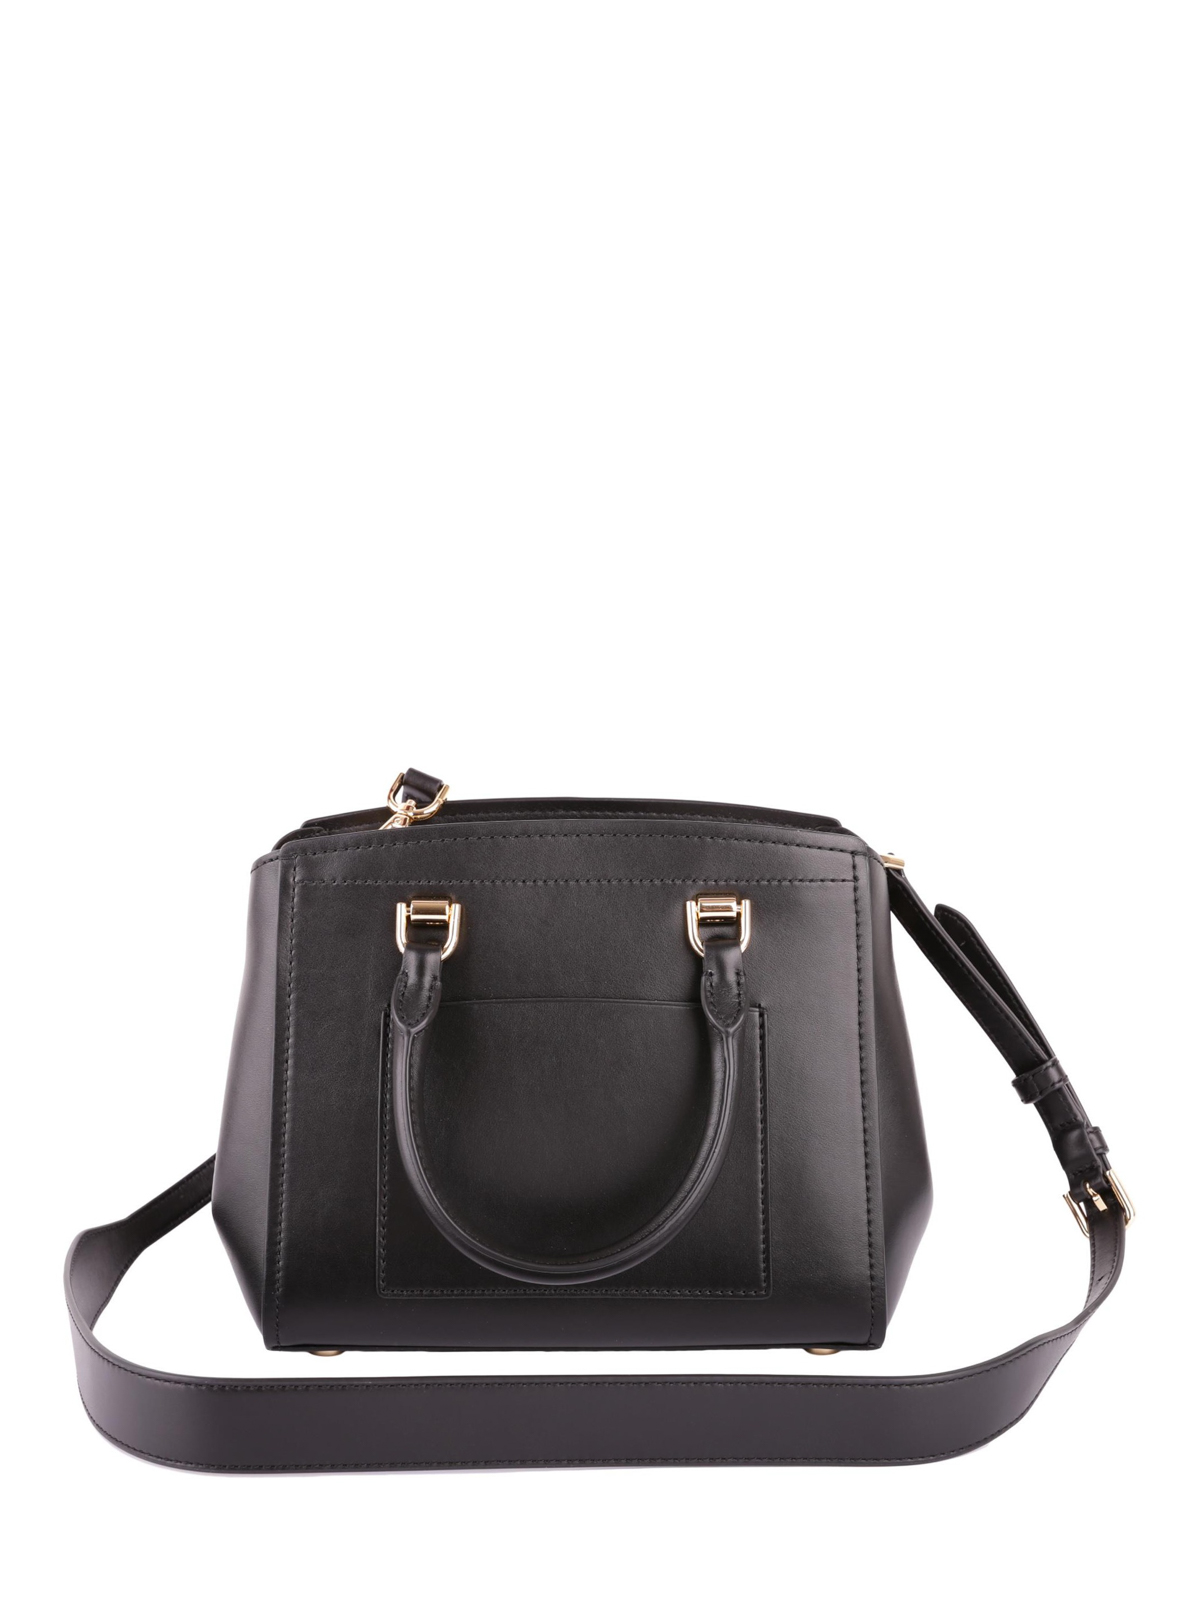 benning medium leather satchel black